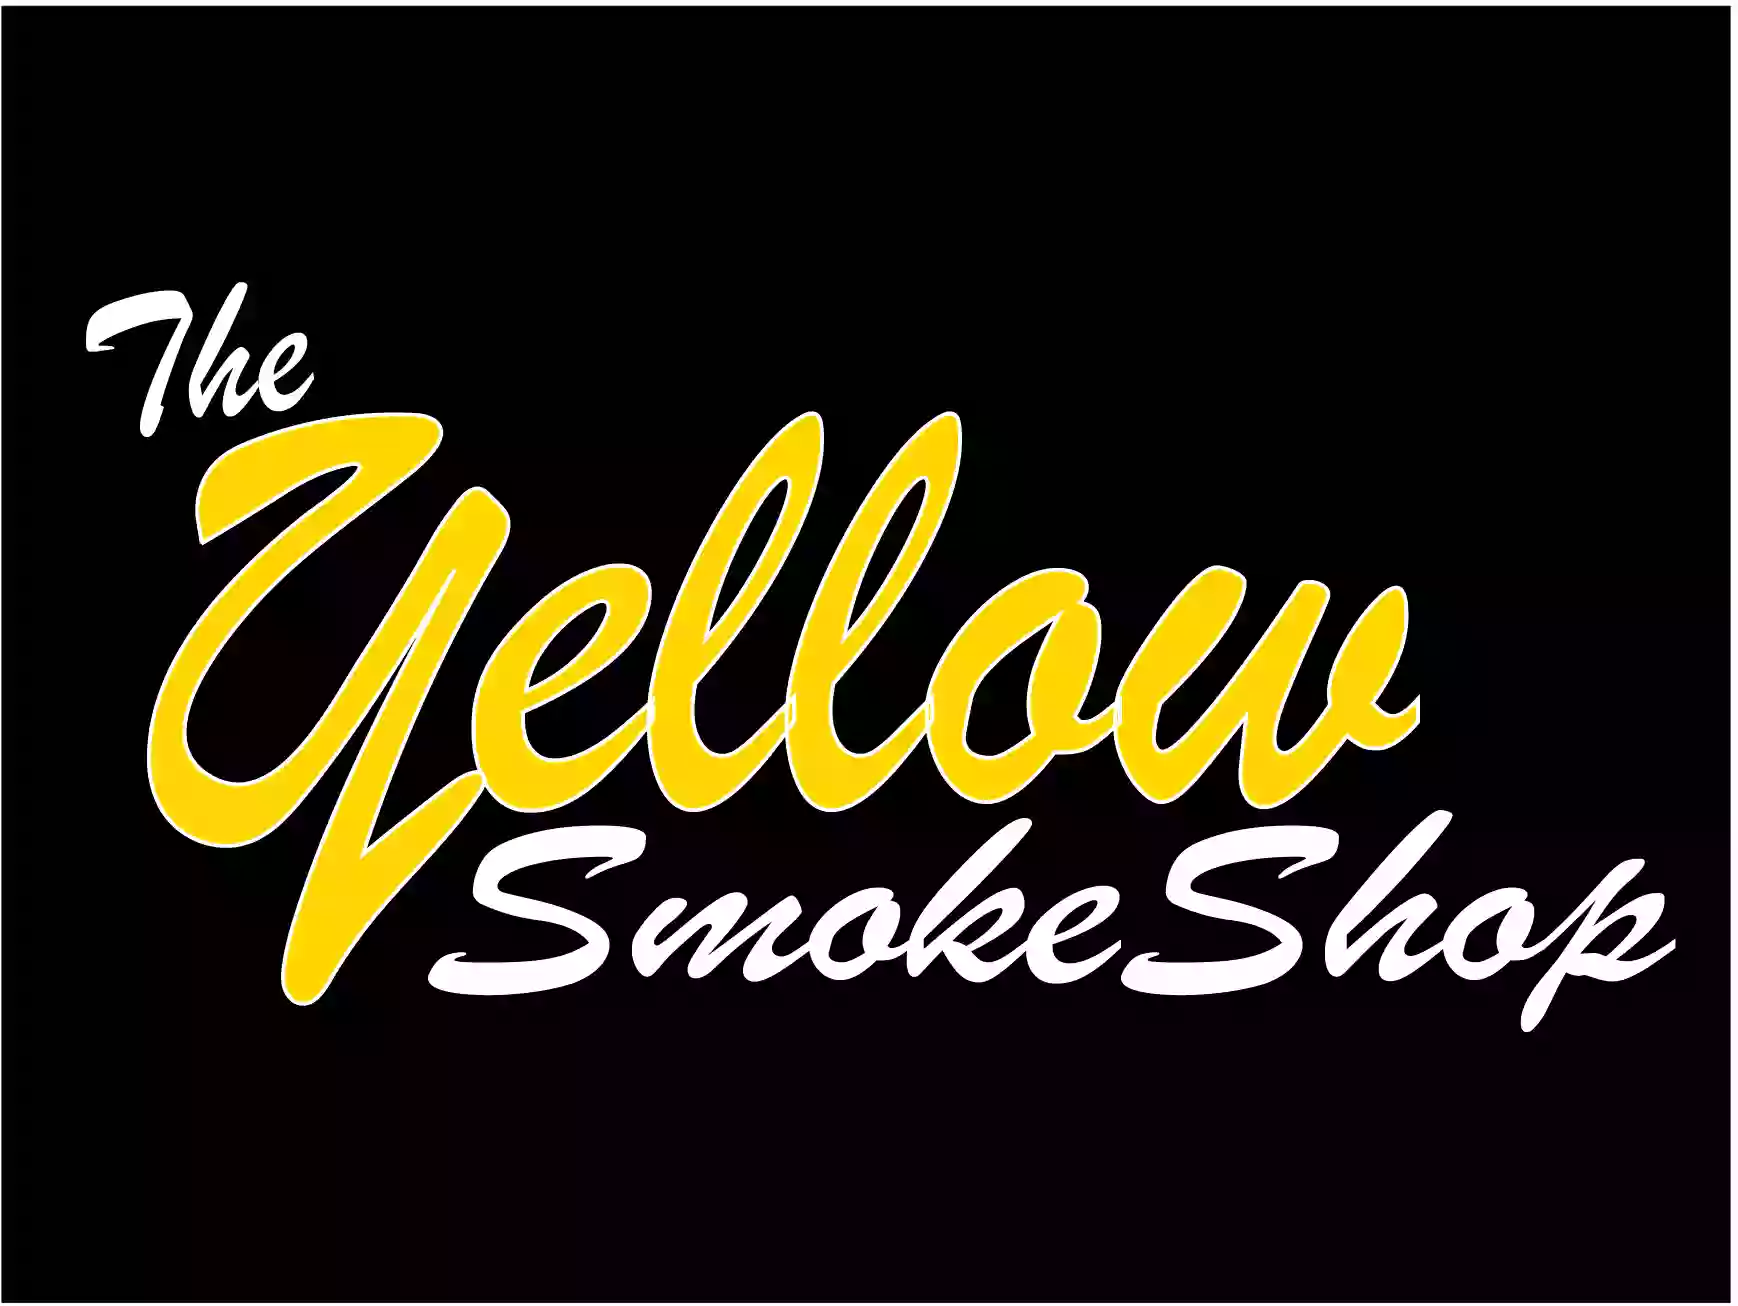 The Yellow Smoke Shop